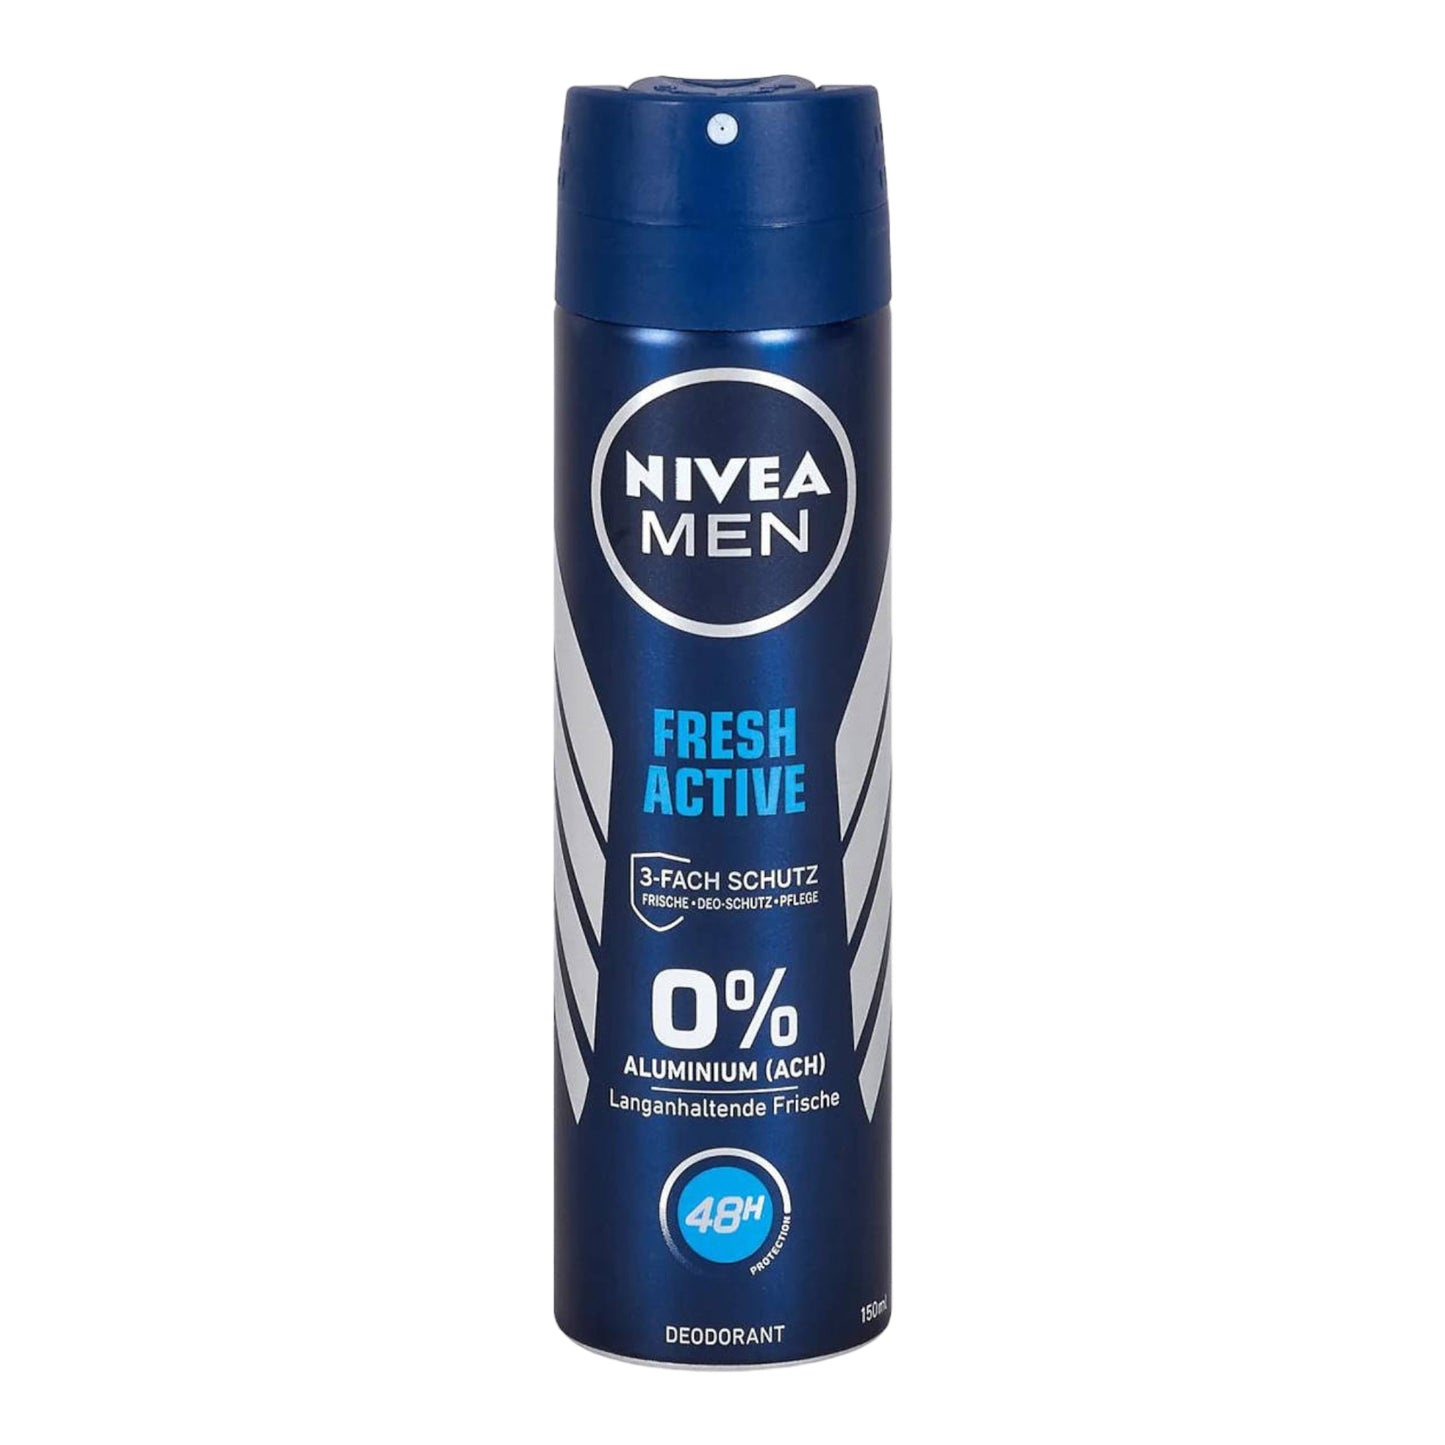 Nivea Men Fresh Active anti-perspirant spray 150ml